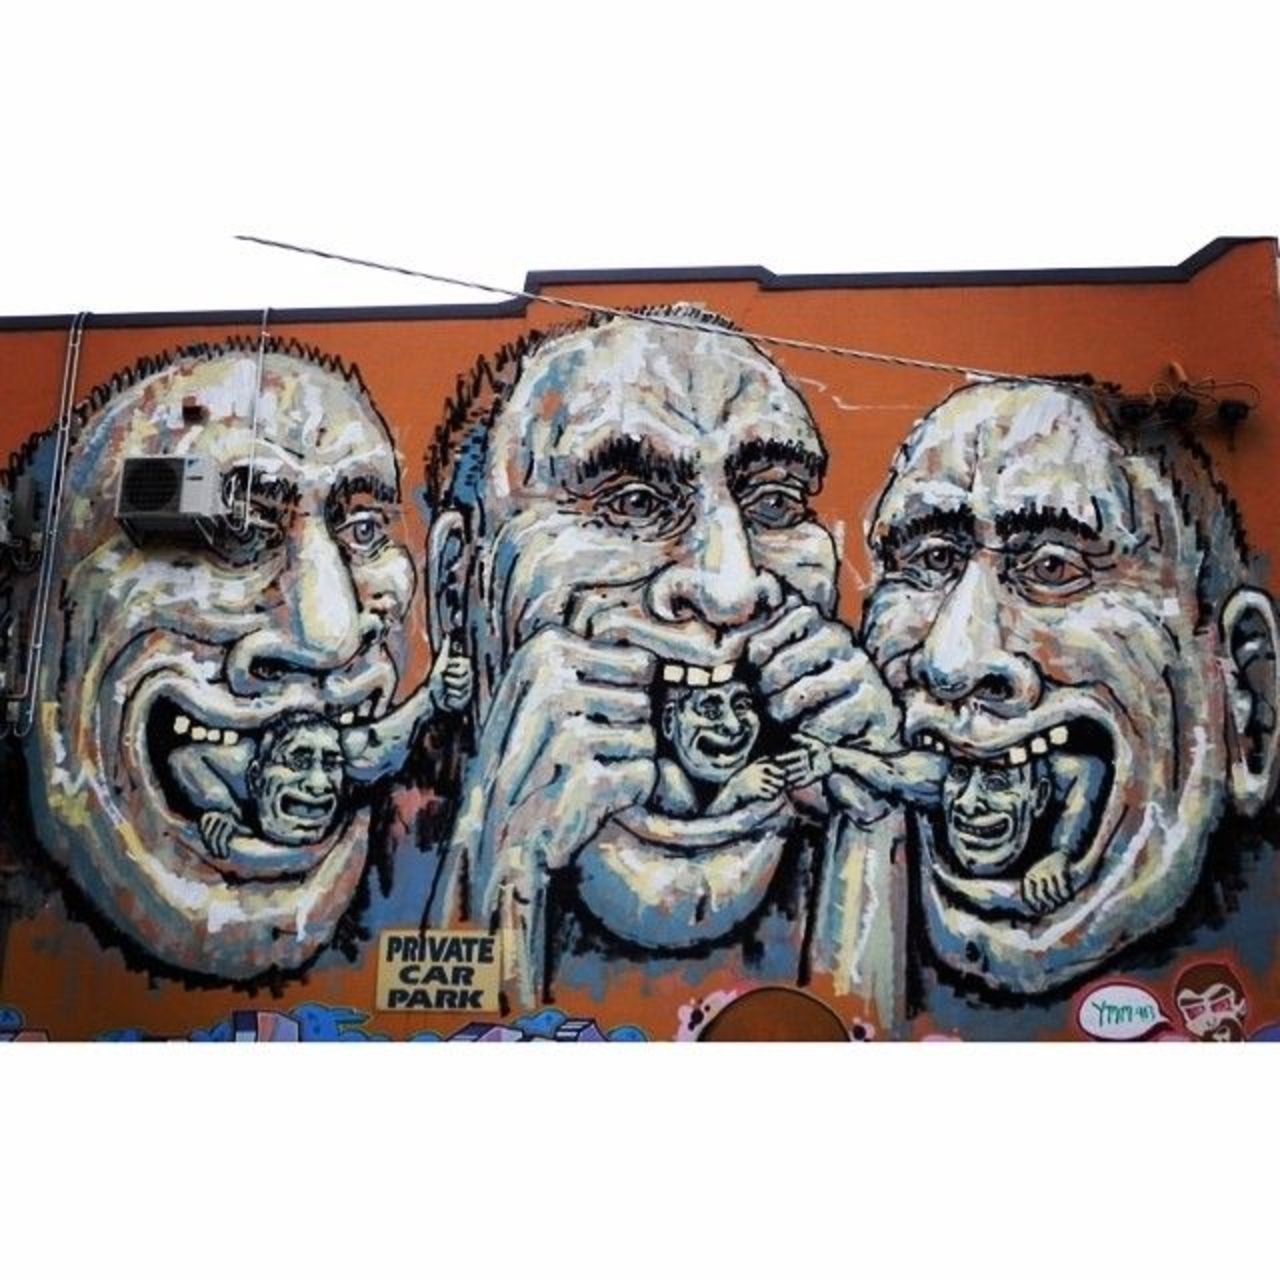 Collingwood

#Graffiti #StreetArt #Mural #painting #Urban #Art http://t.co/pMLfIpmYvp